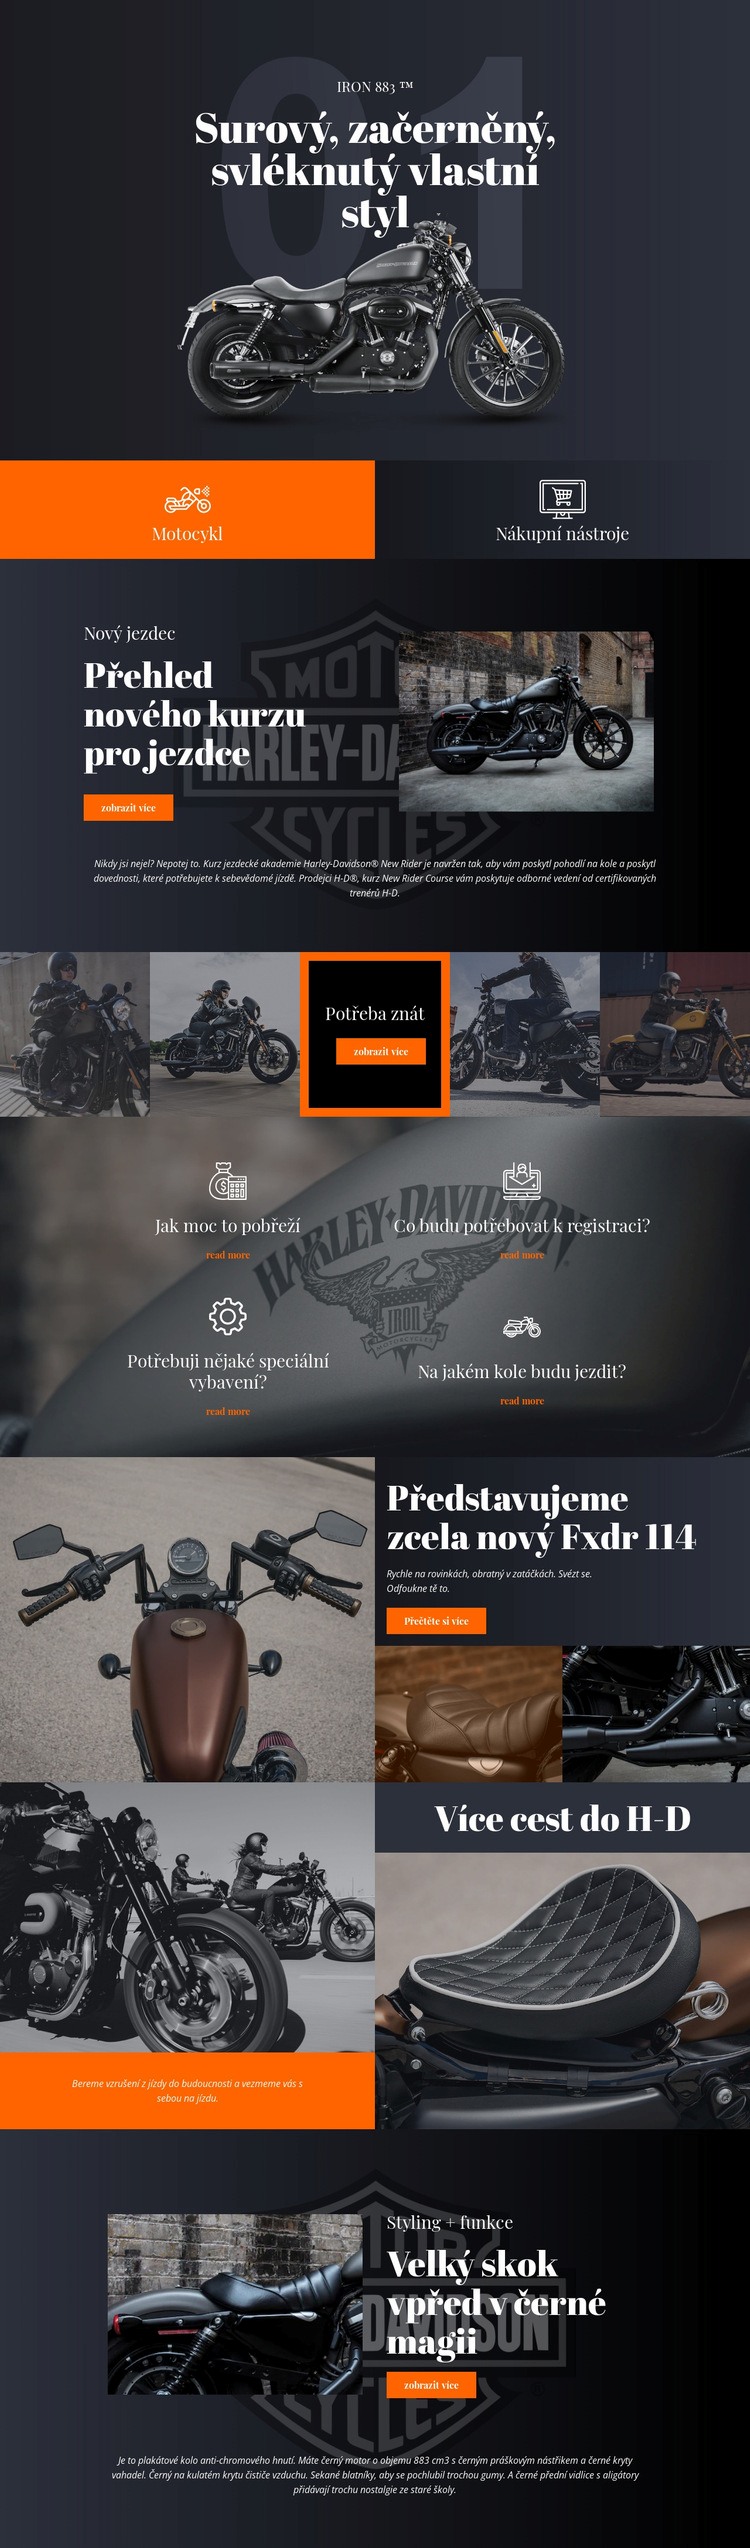 Harley Davidson Téma WordPress